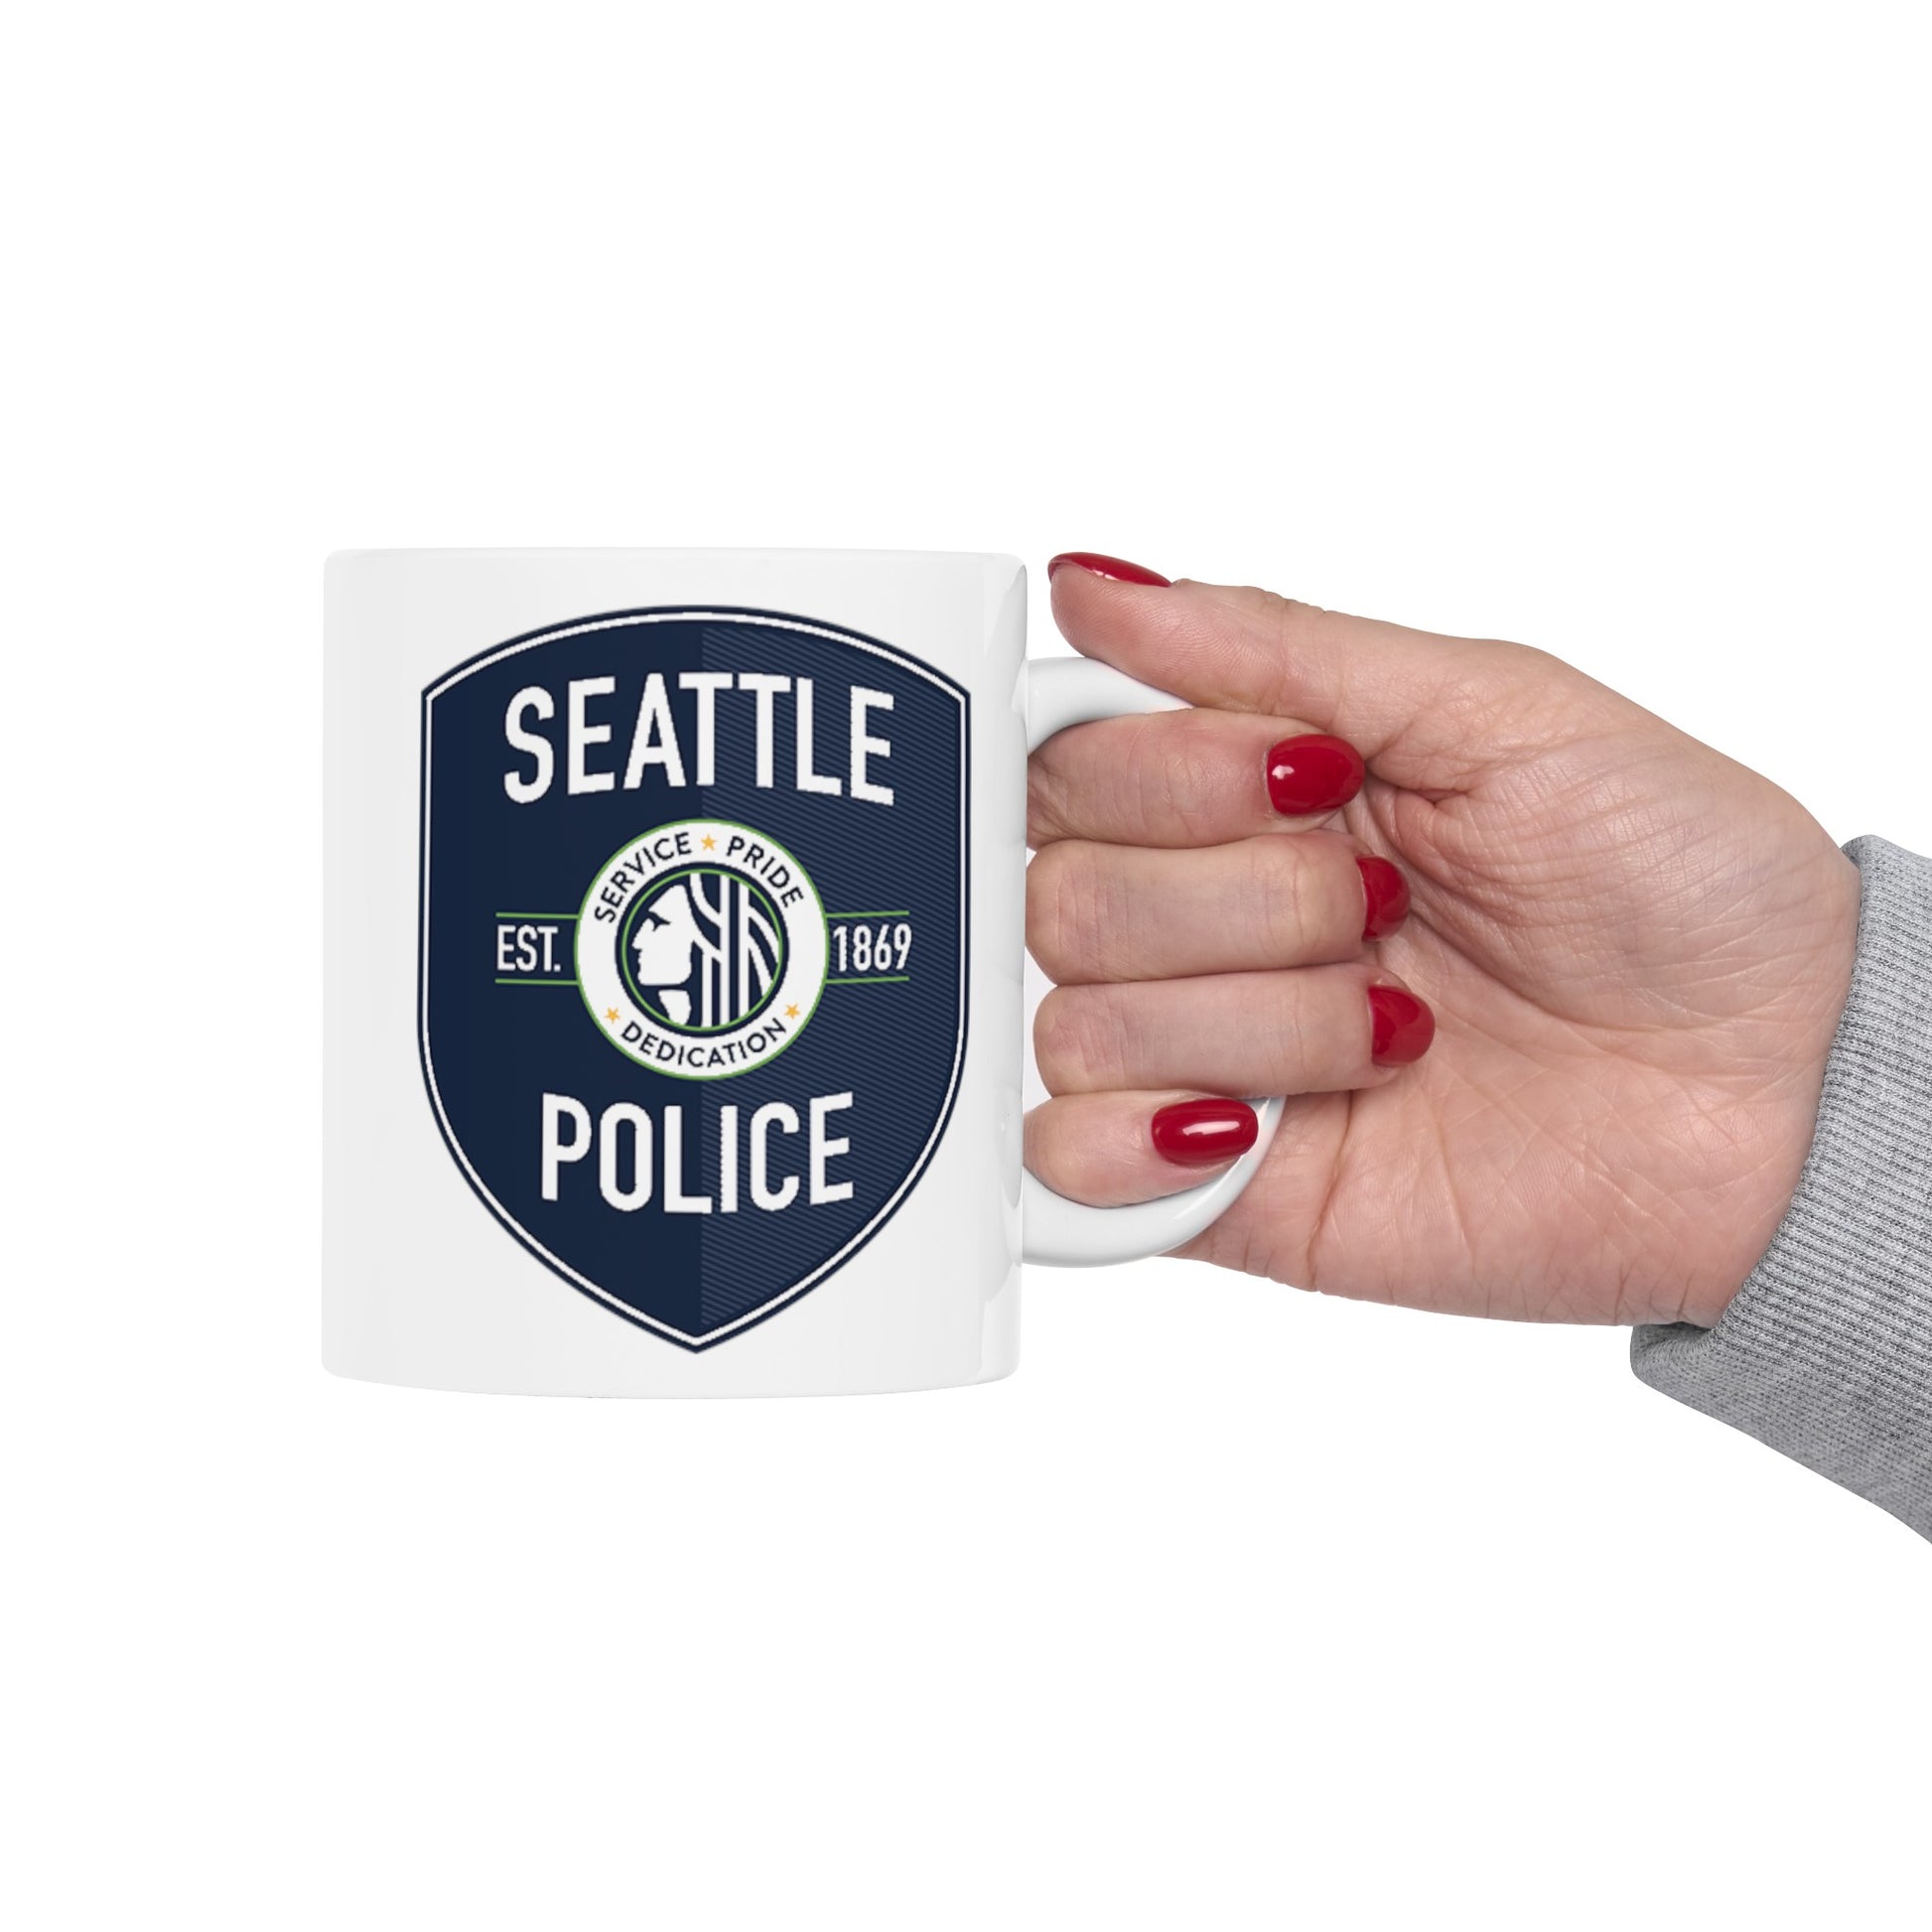 Seattle Police Coffee Mug - Double Sided White Ceramic 11oz by TheGlassyLass.com